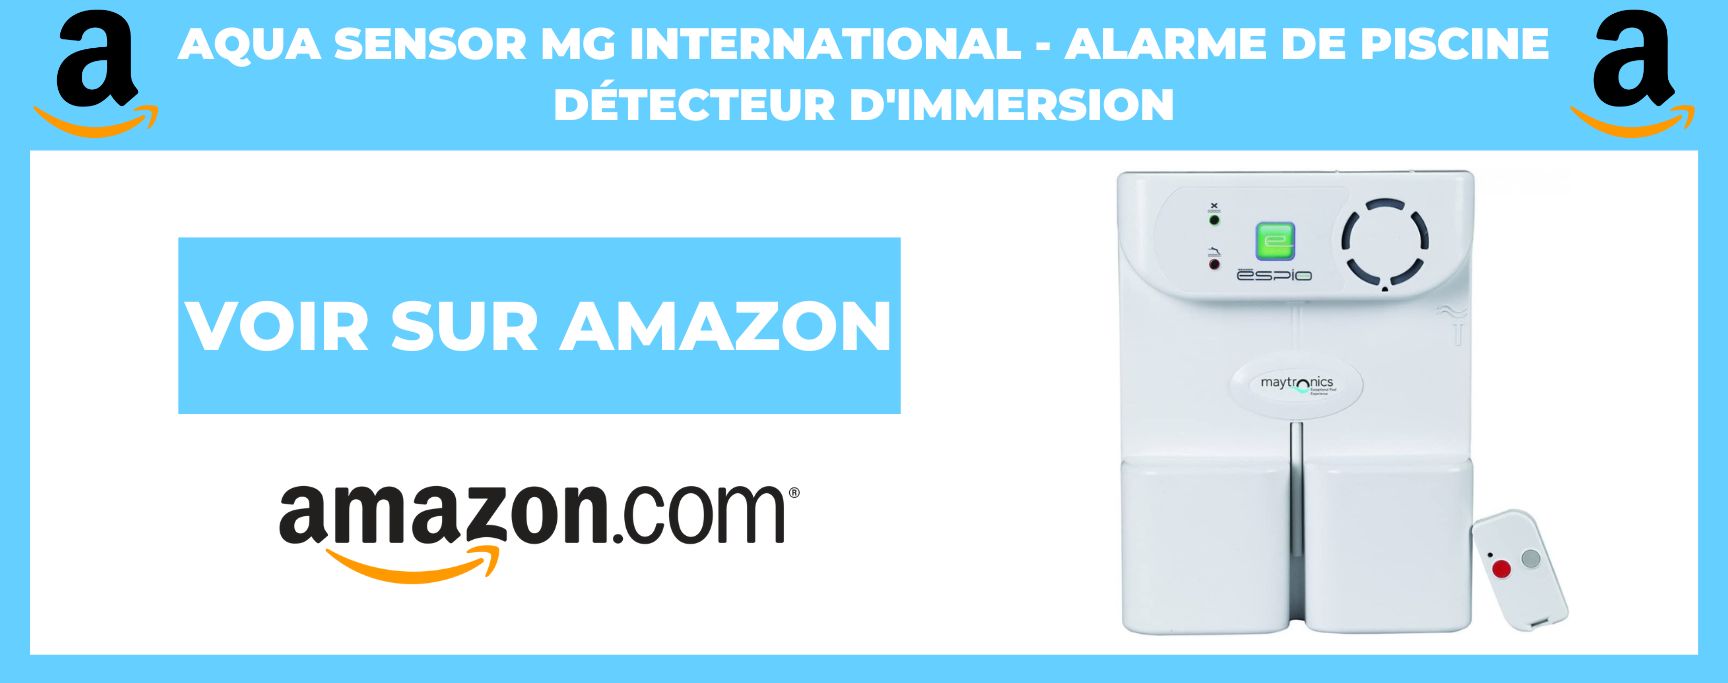 Aqua Sensor MG International -  Alarme de Piscine - Détecteur d’Immersion